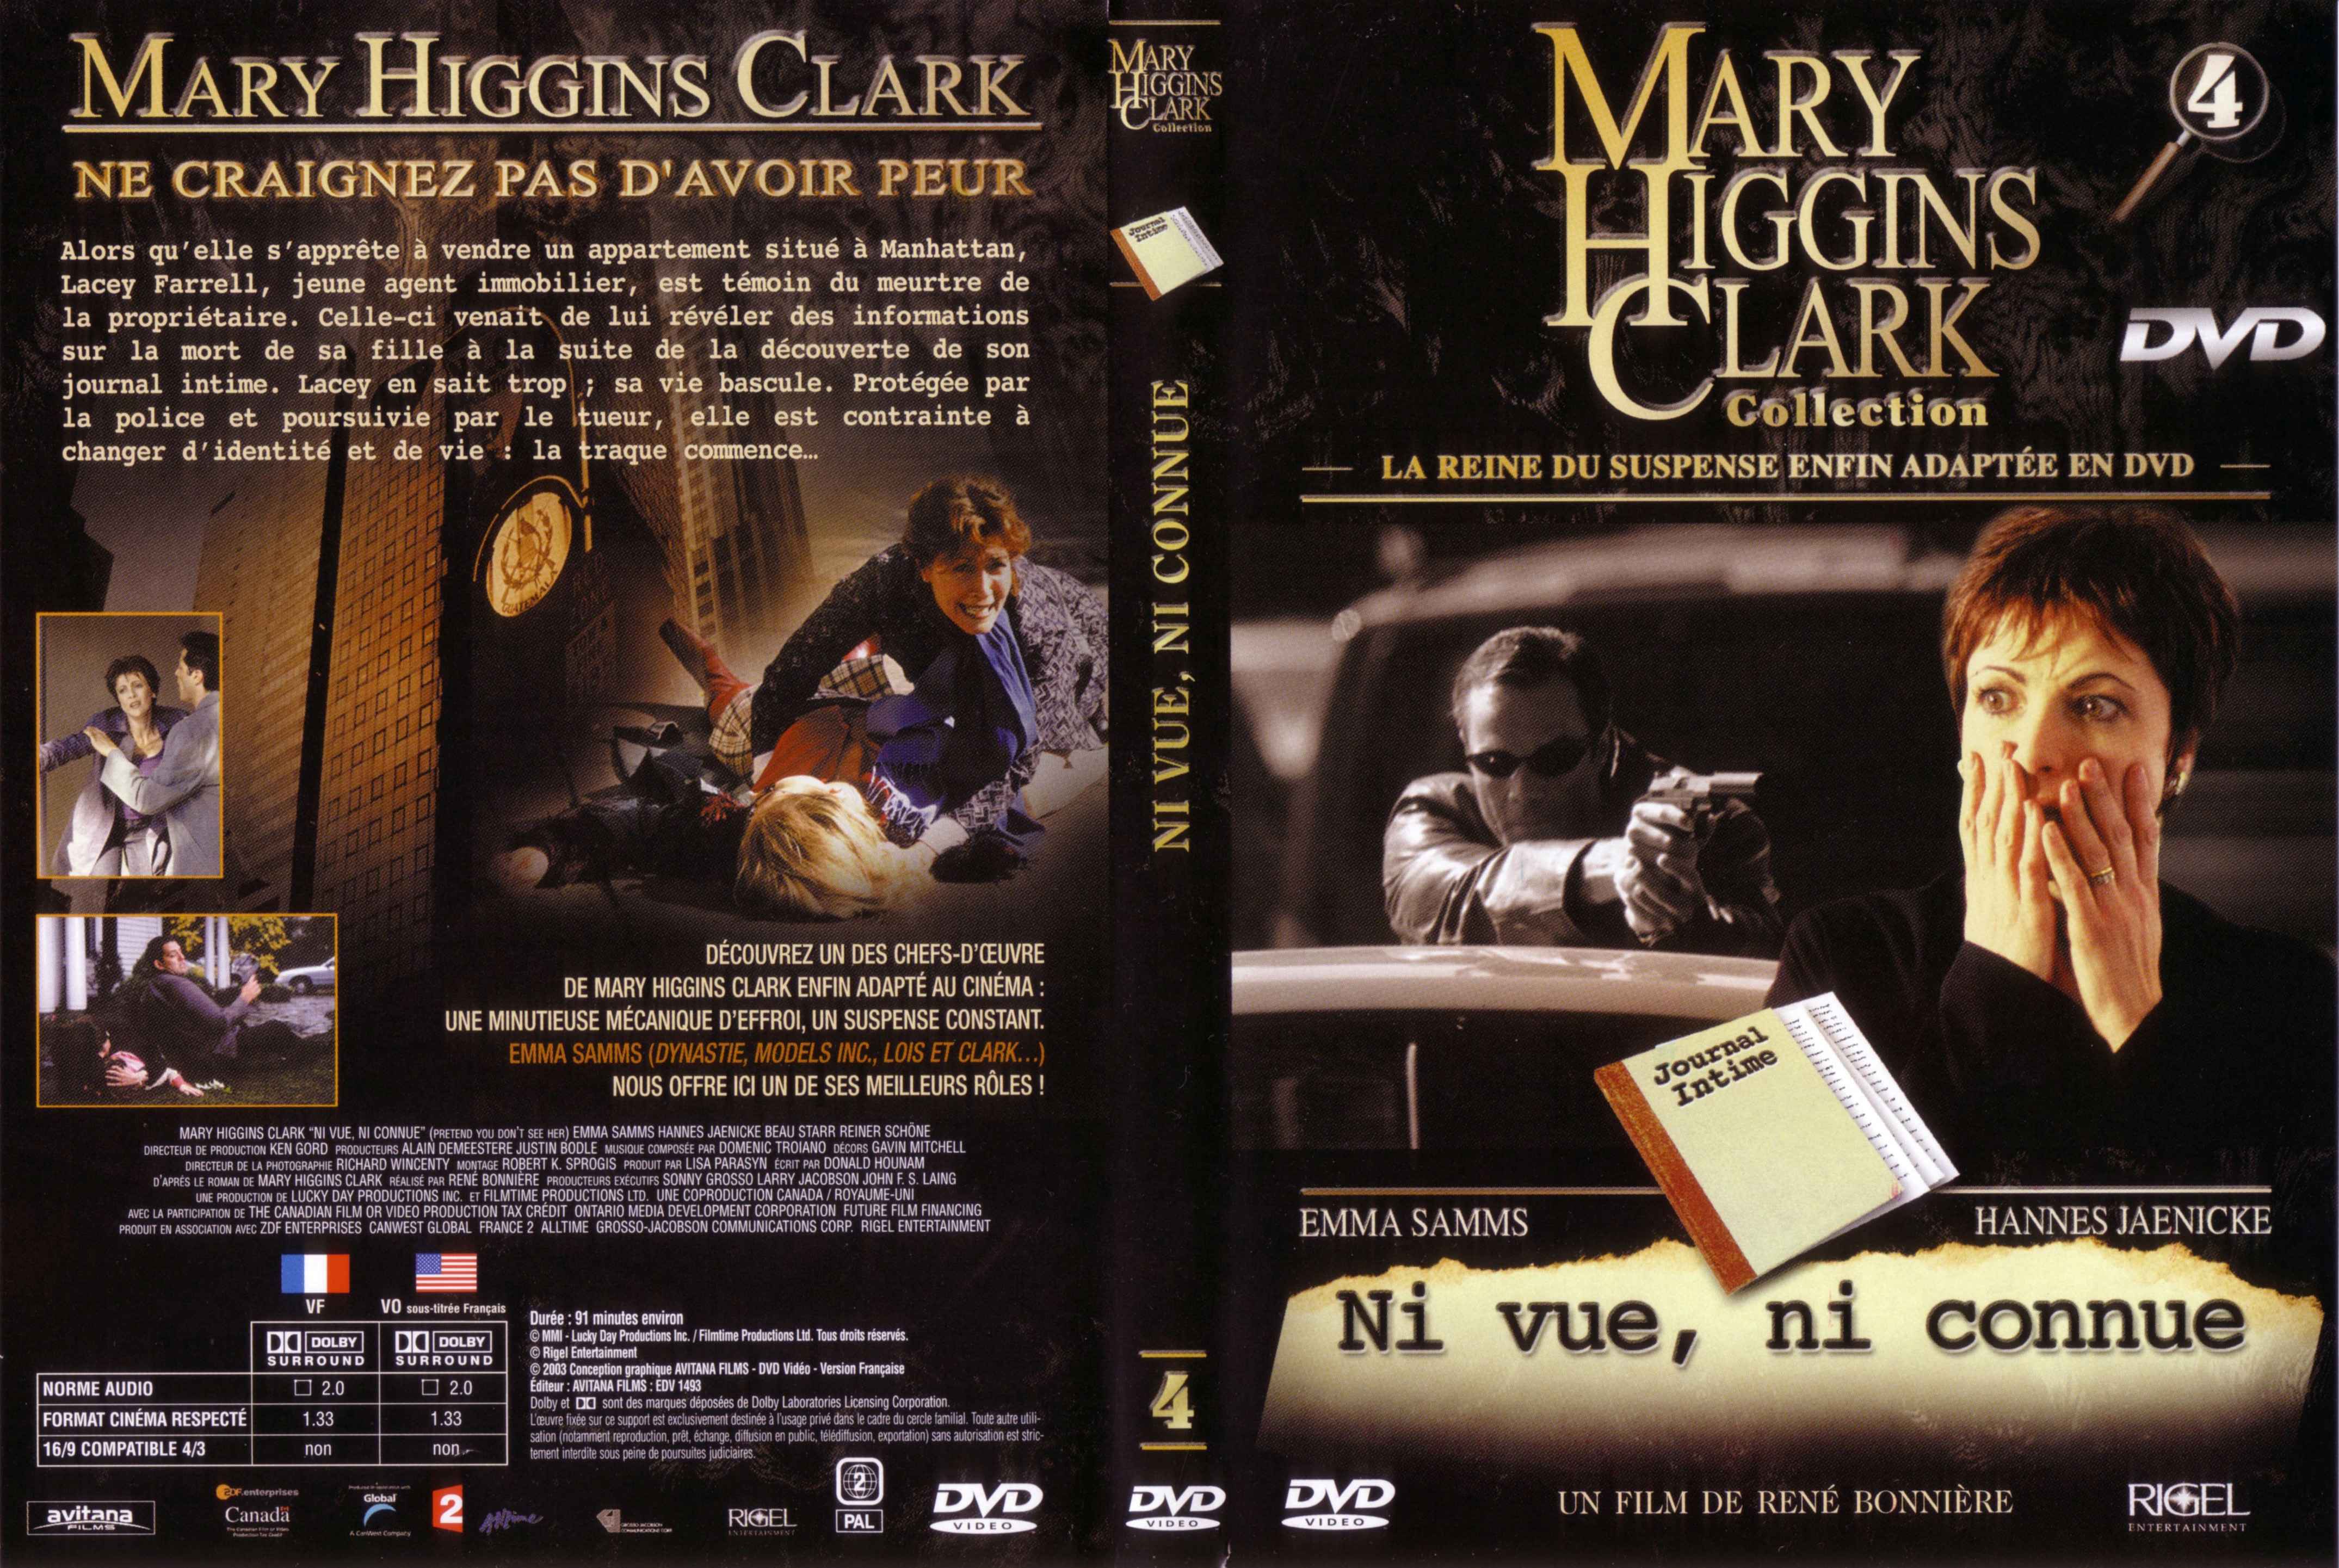 Jaquette DVD Mary Higgins Clark vol 04 - Ni vue ni connue